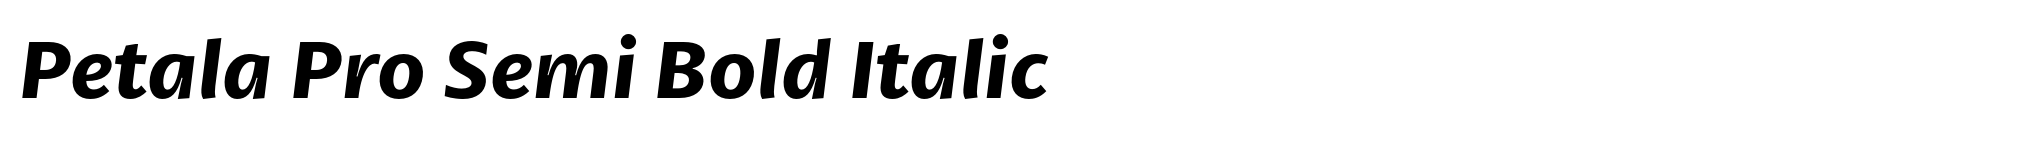 Petala Pro Semi Bold Italic image